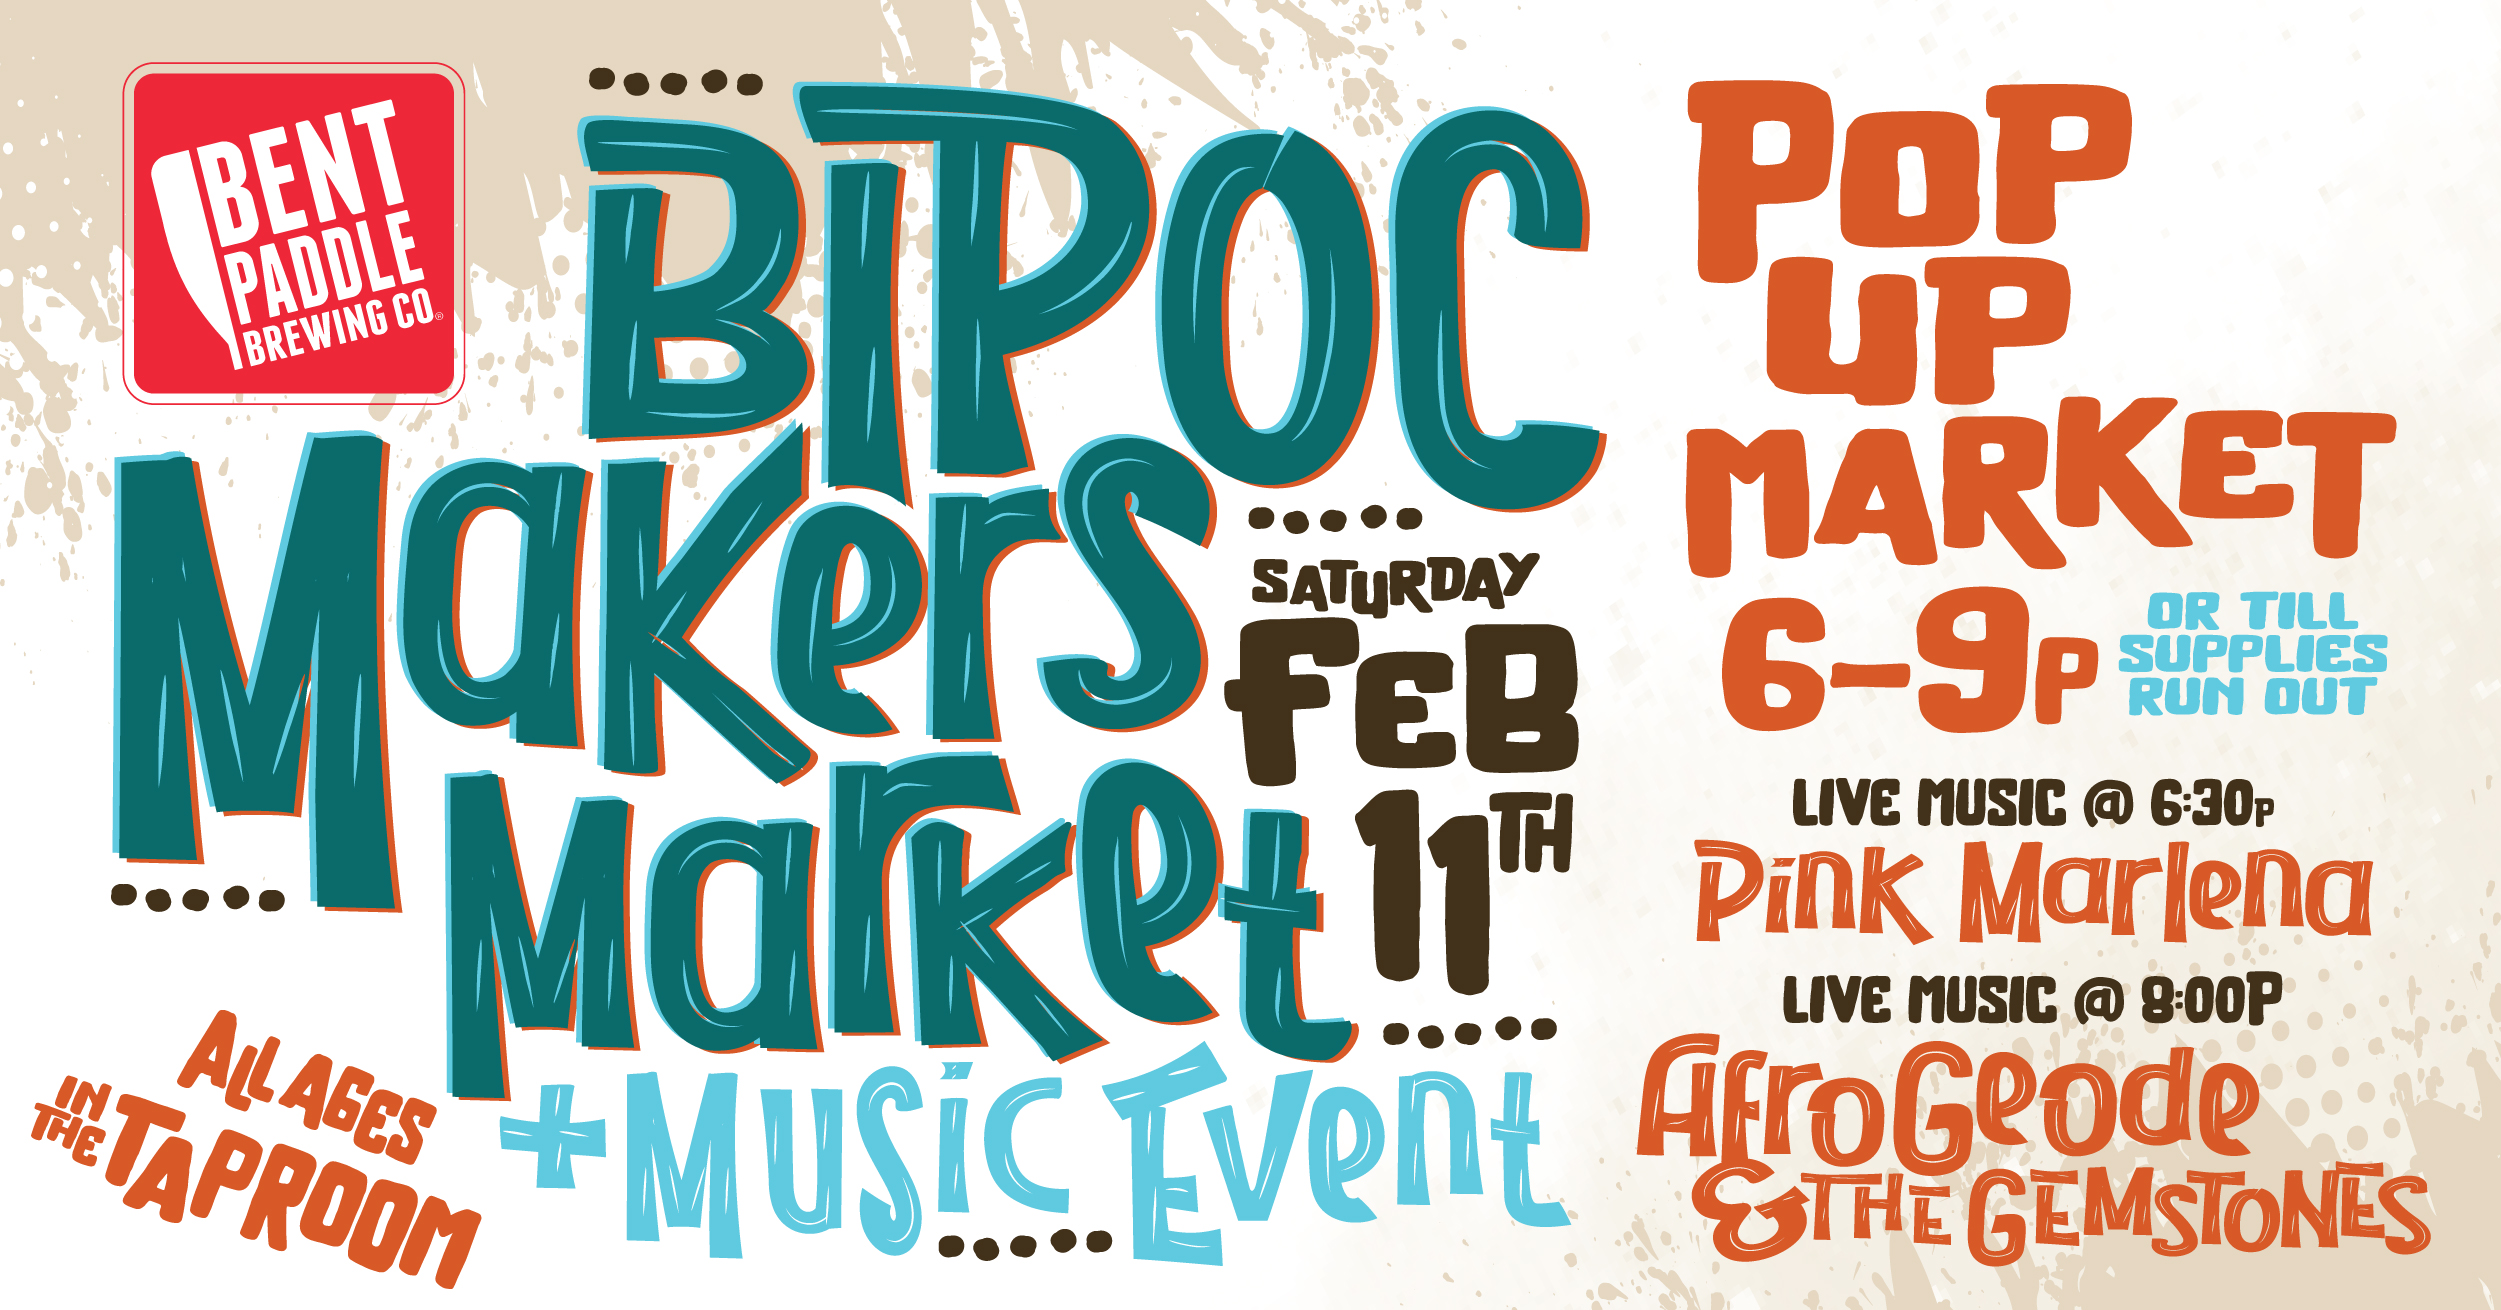 BIPOC Makers Market & Music at Bent Paddle